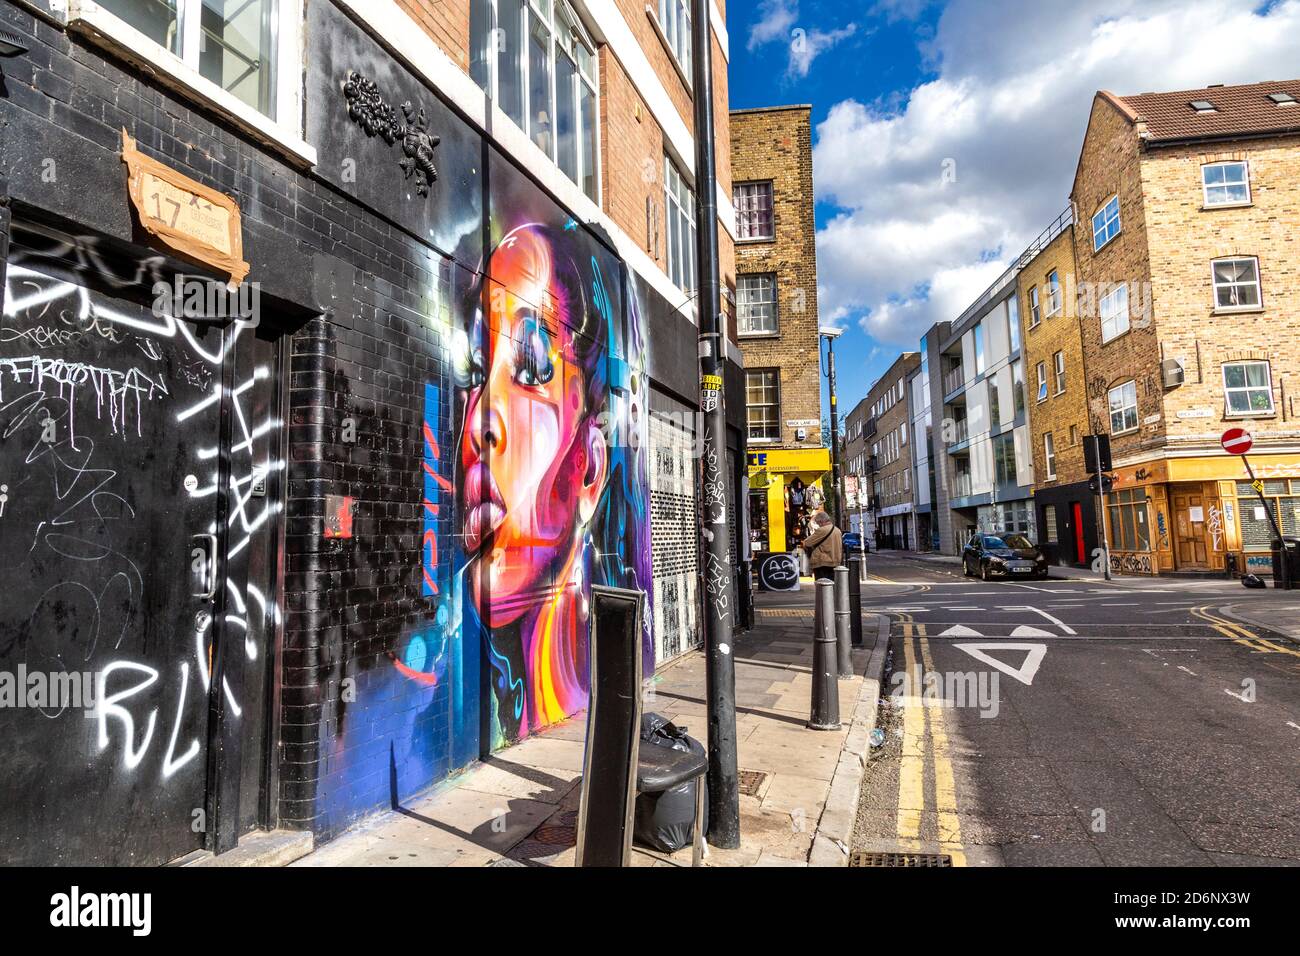 Mural and street off of Brick Lane, East London, UK Stock Photo